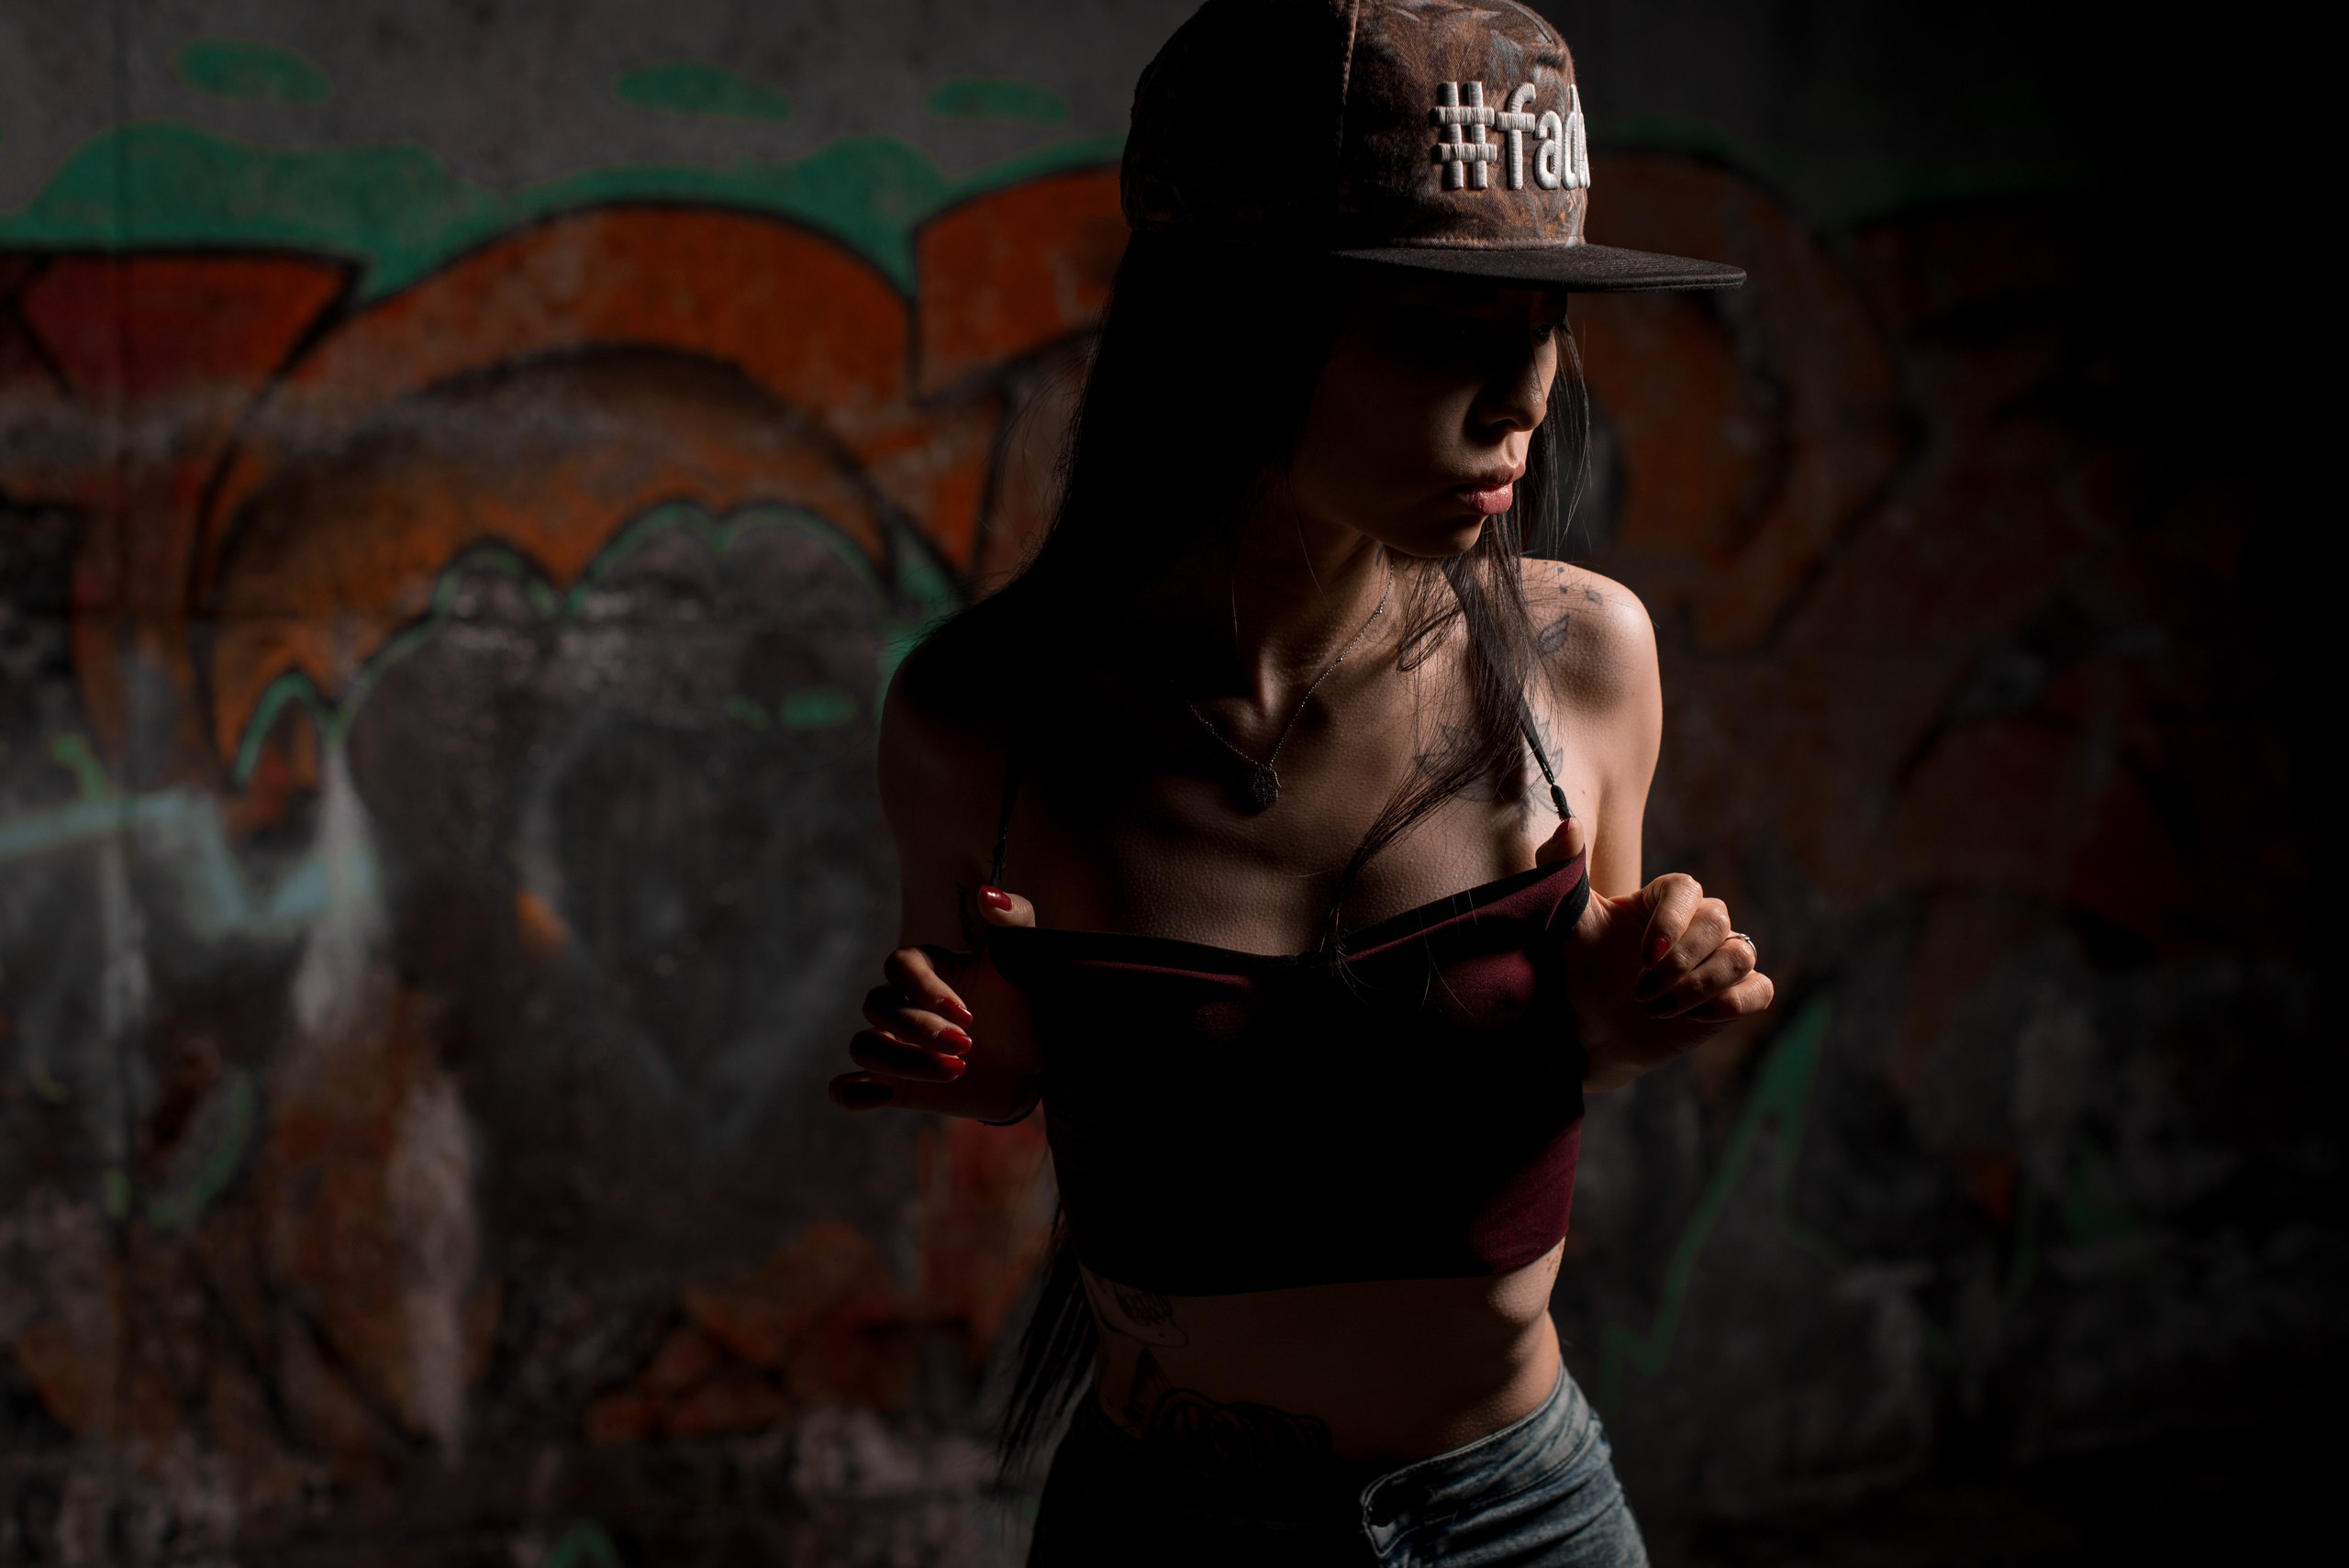 Women Model Brunette Necklace Portrait Baseball Caps Outdoors Short Tops Jeans Graffiti Wall Dark Wo 2560x1709